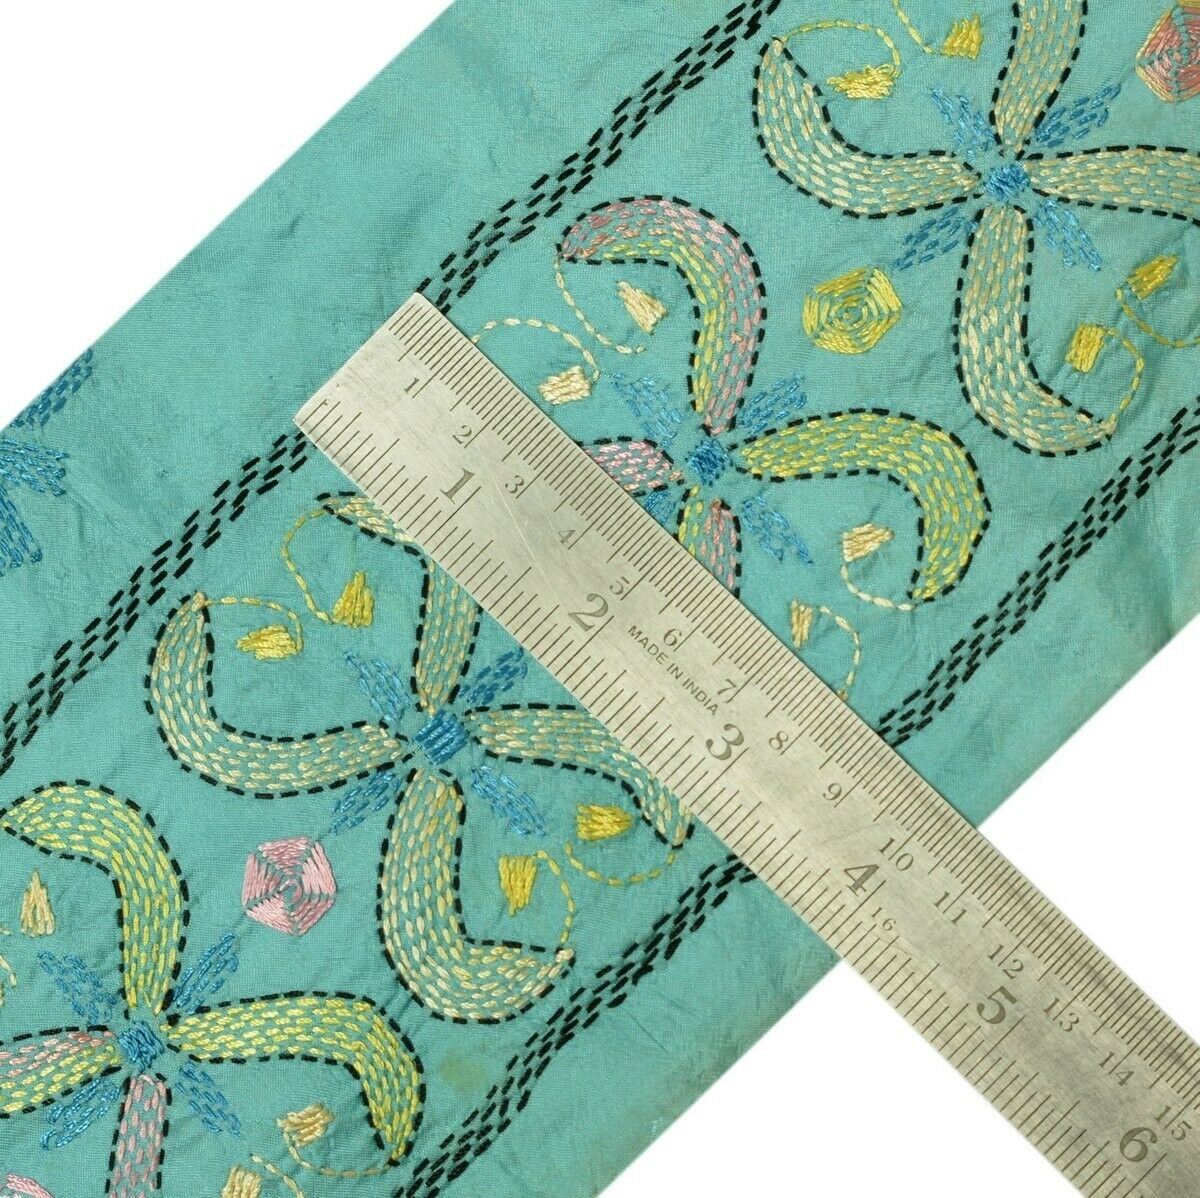 Vintage Saree Border Indian Craft Trim Hand Embroidered Kantha Ribbon Lace